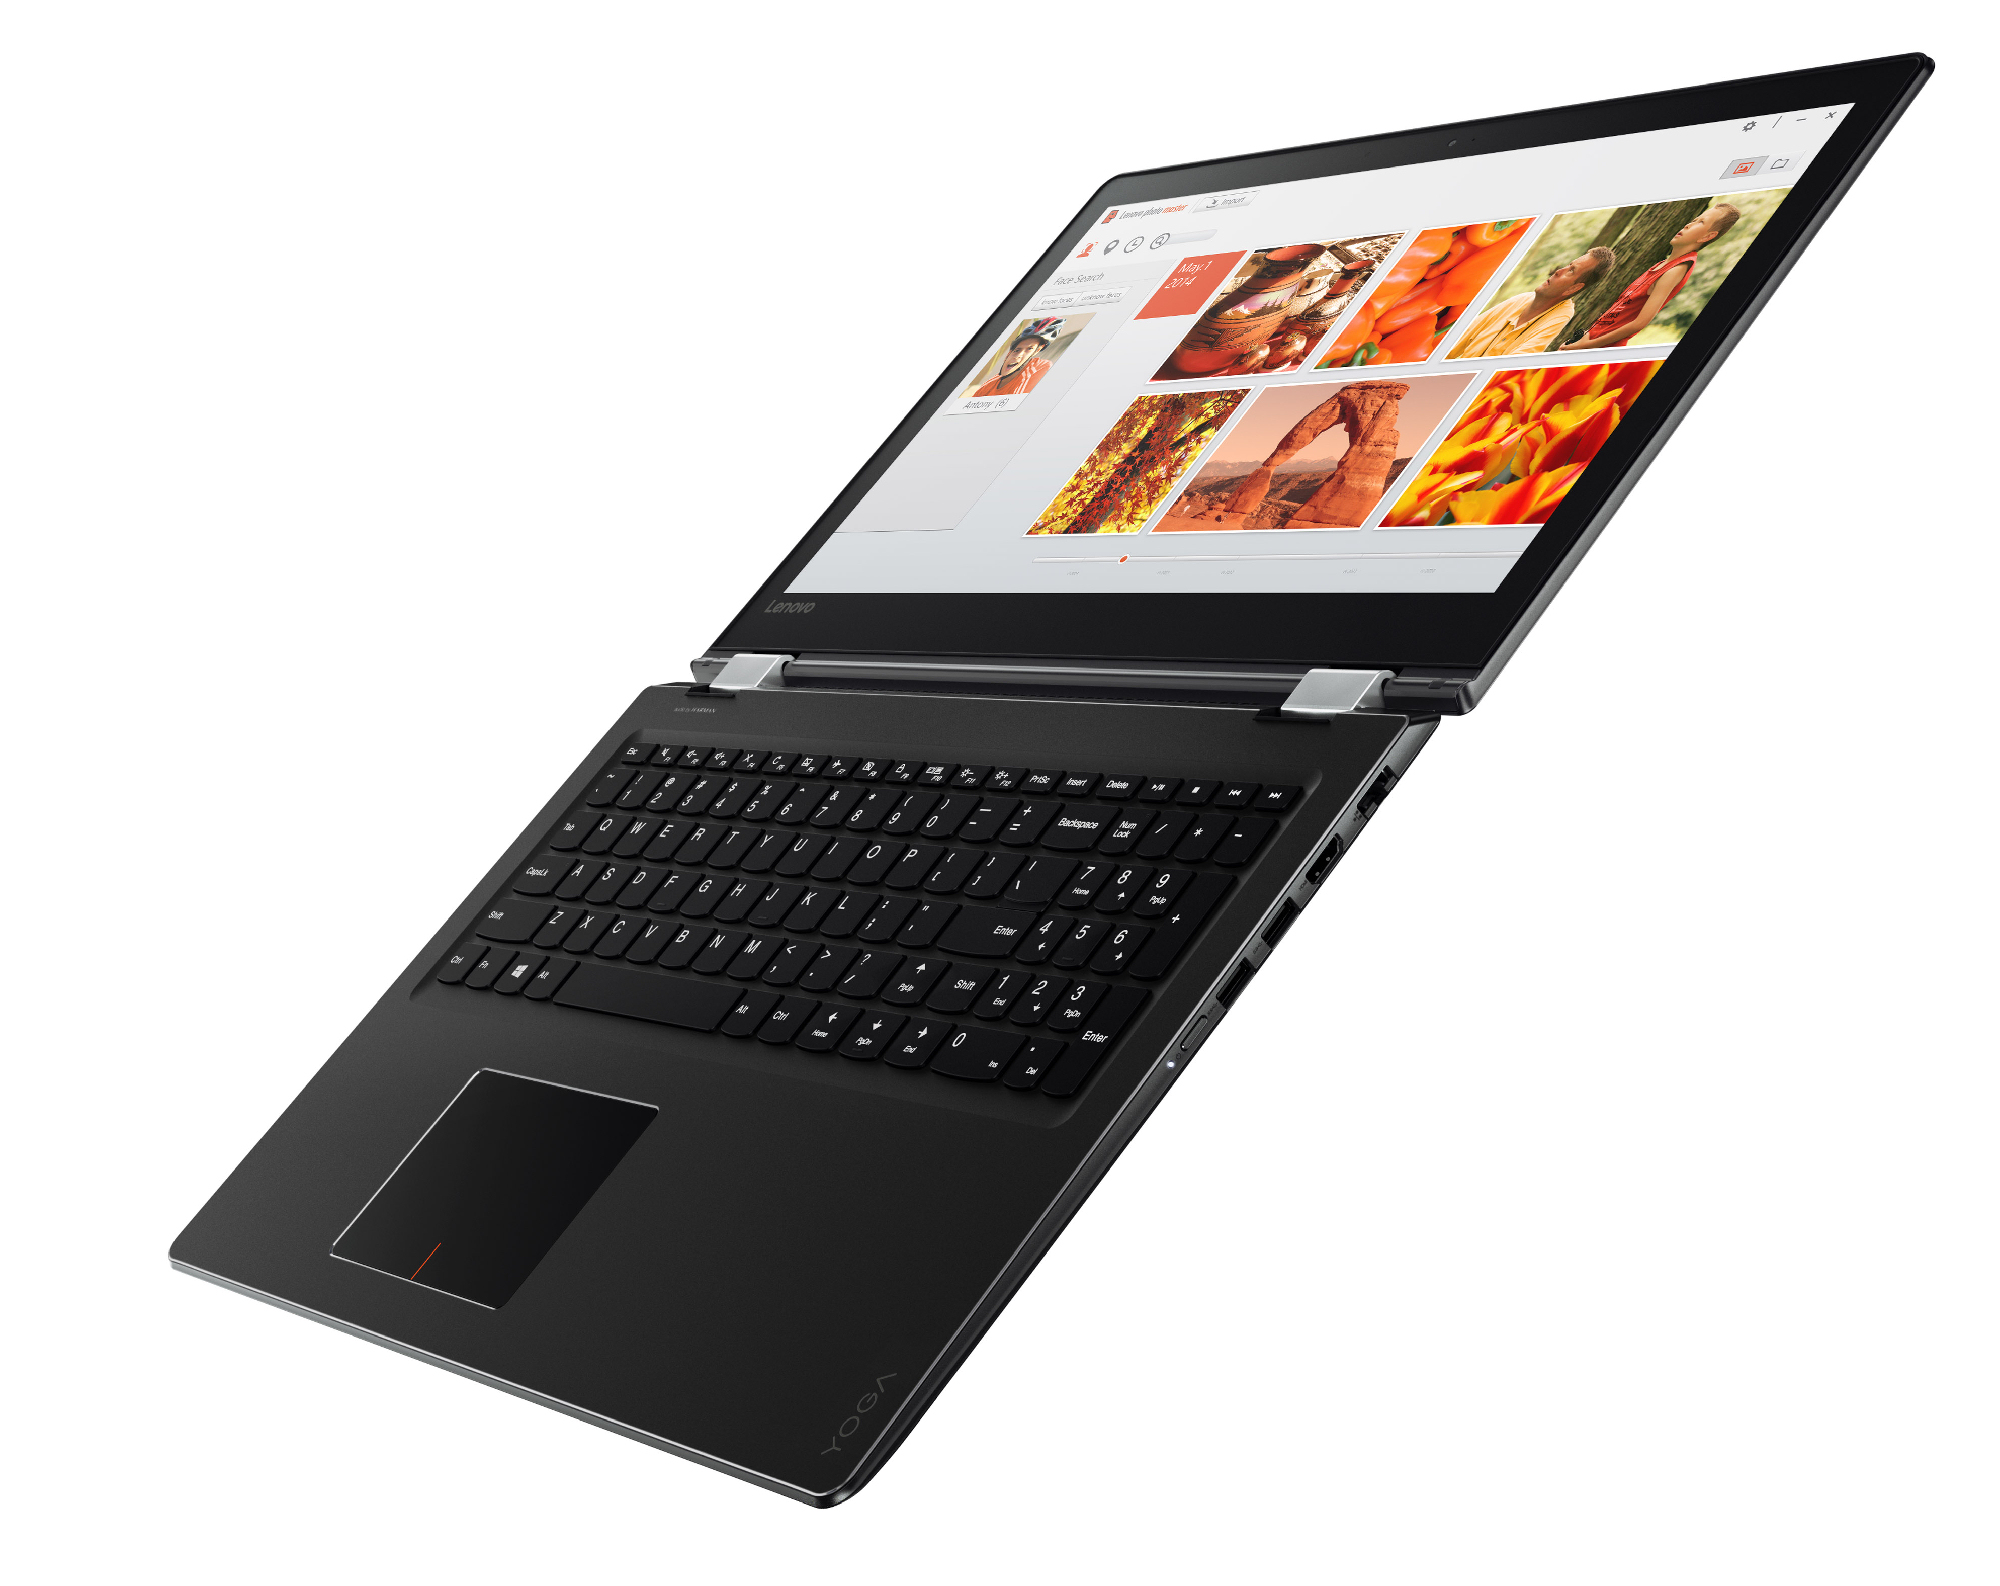 Lenovo Yoga 510-15IKB Notebook Review - NotebookCheck.net Reviews